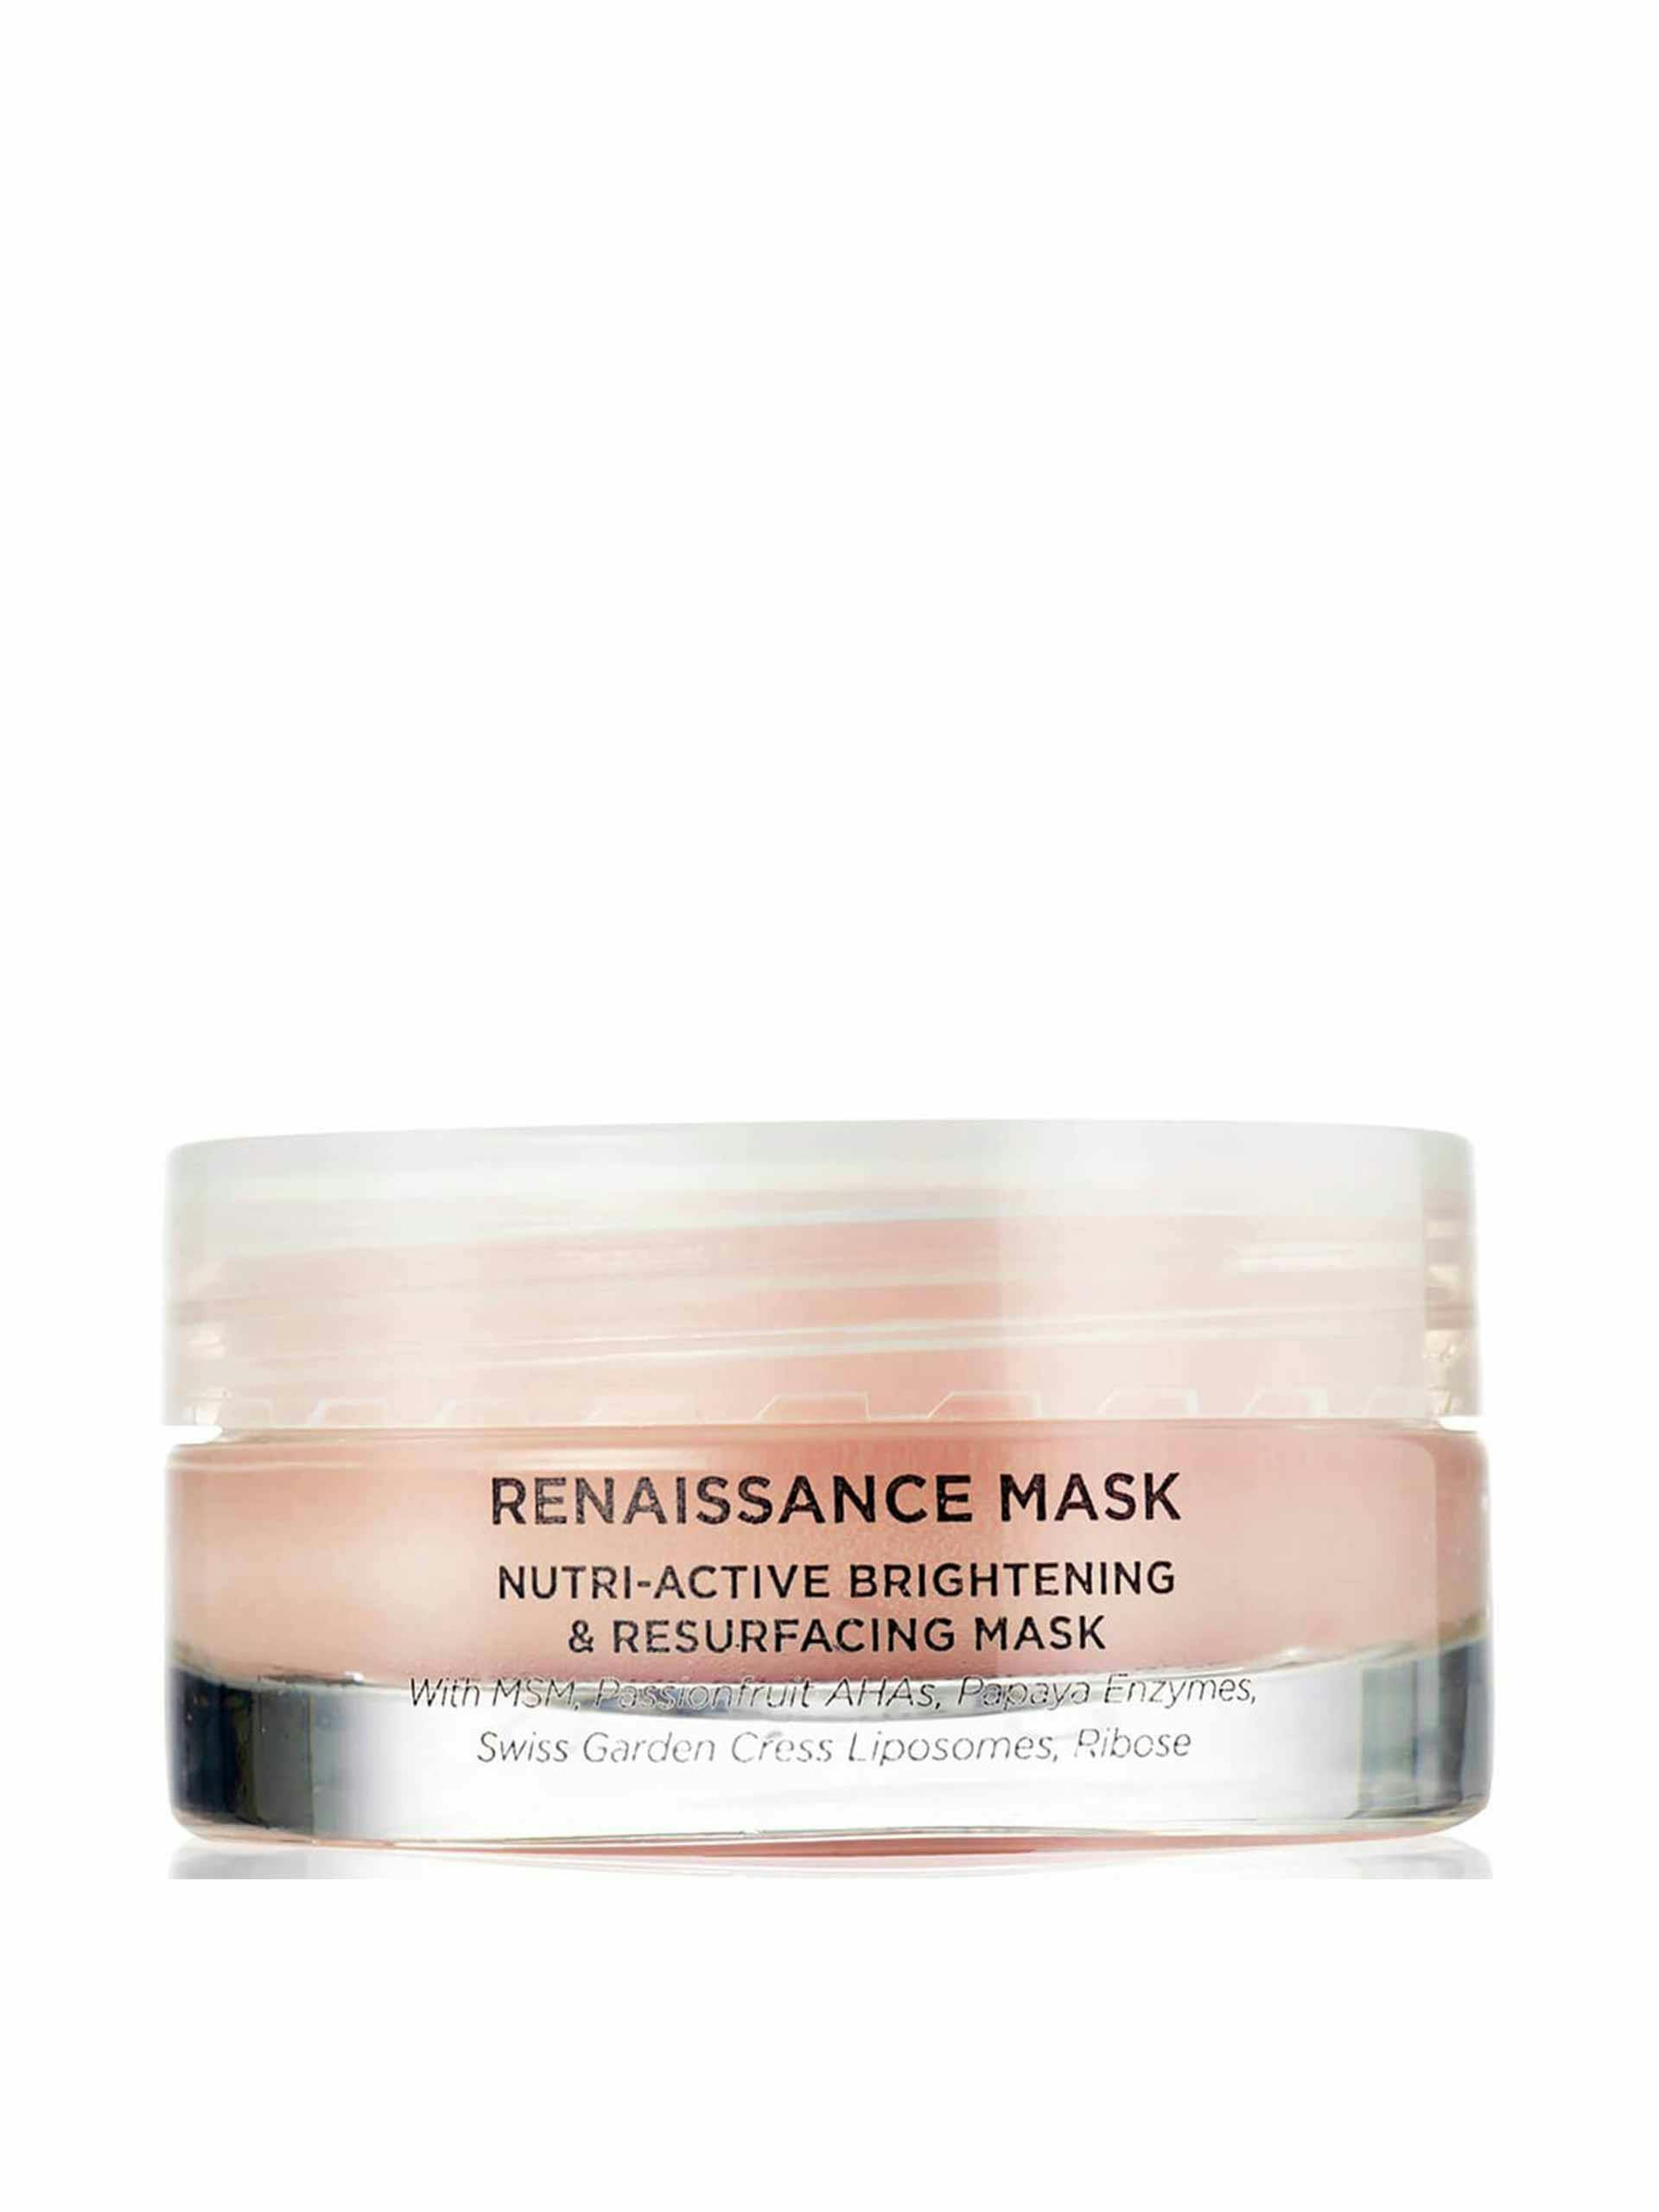 Renaissance mask